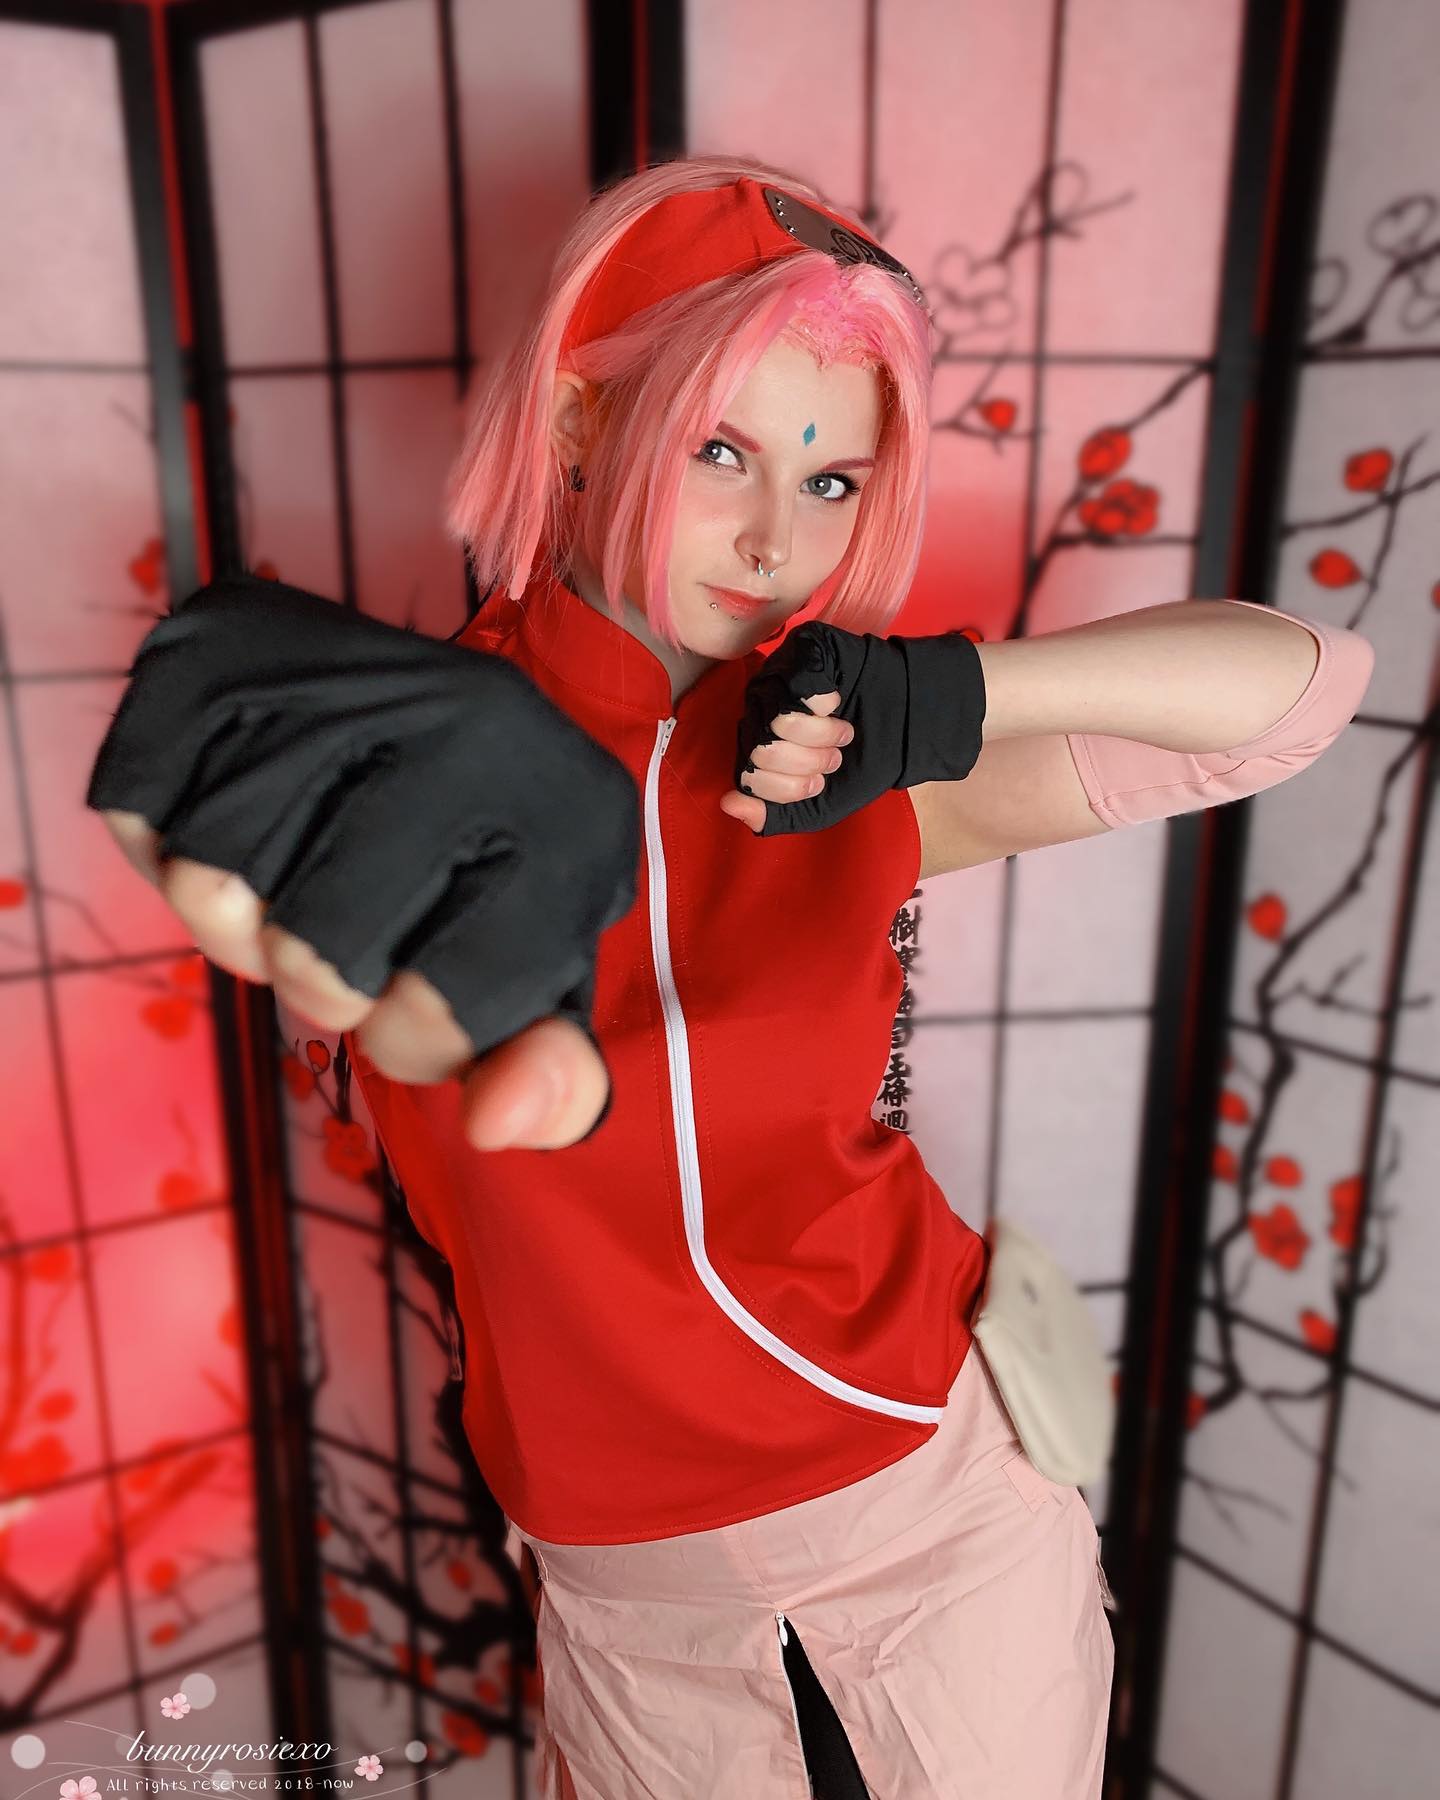 Cosplayer recriou de forma perfeita o visual de Sakura em Naruto Shippuden